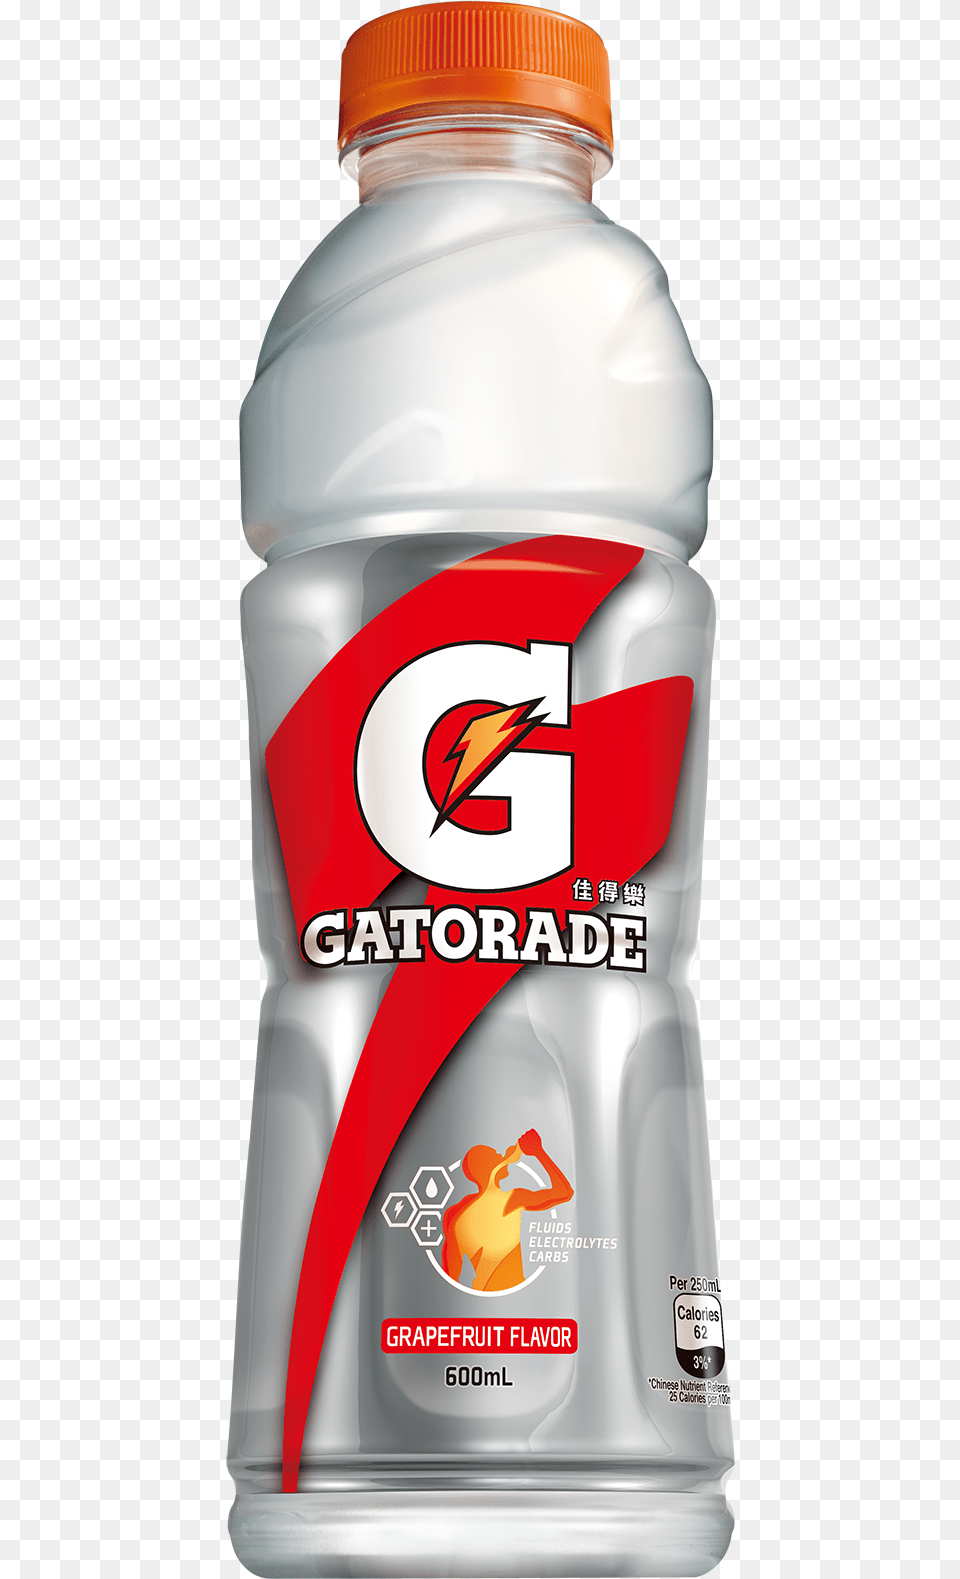 Gatorade Background Gatorade, Bottle, Shaker Png